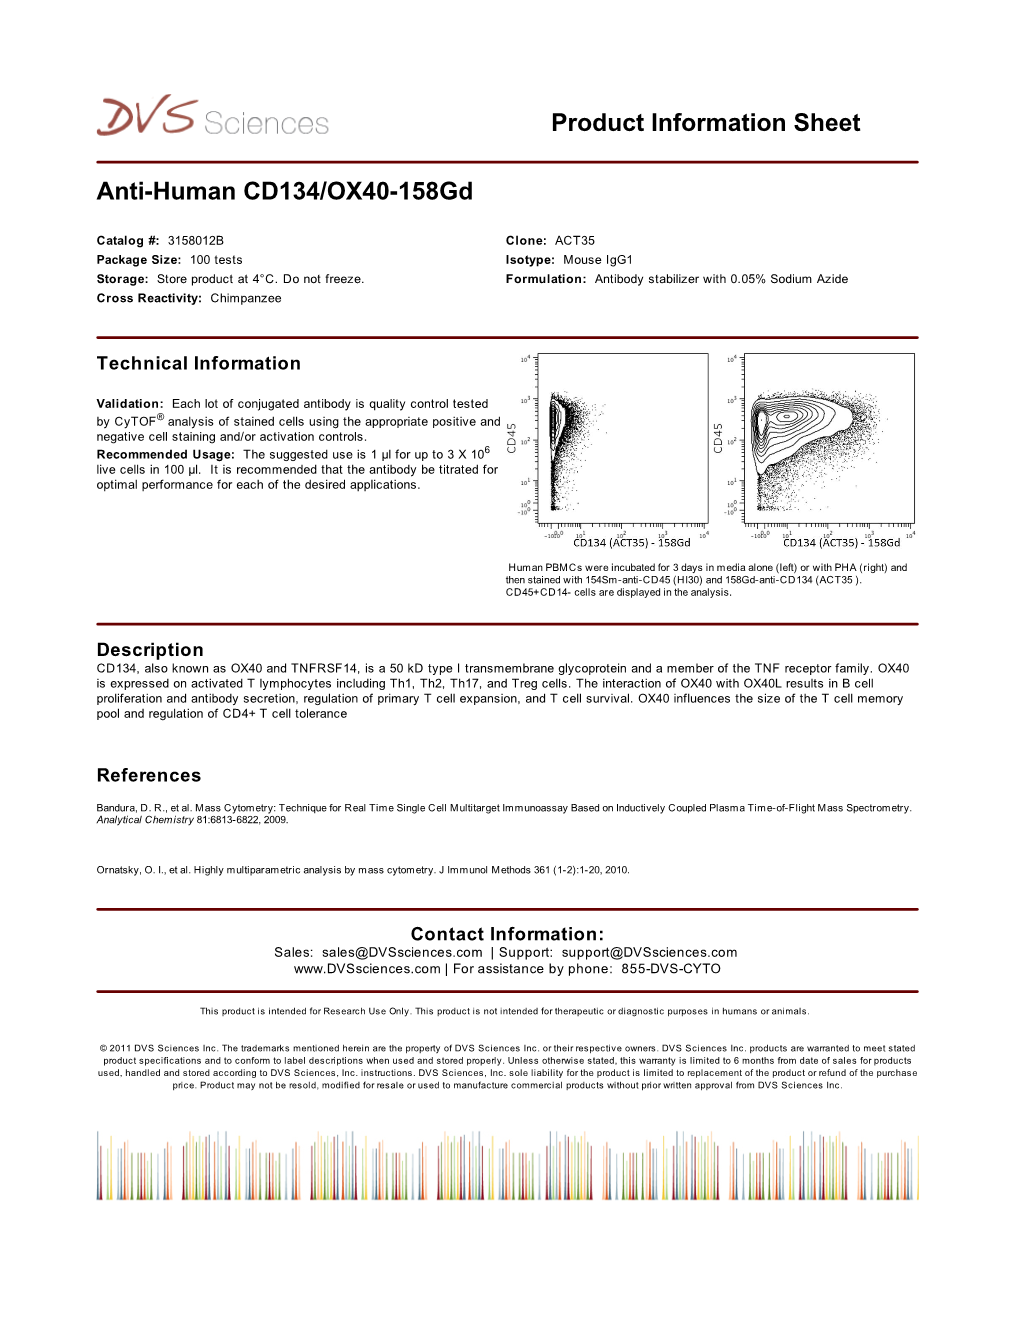 Anti-Human CD134/OX40-158Gd